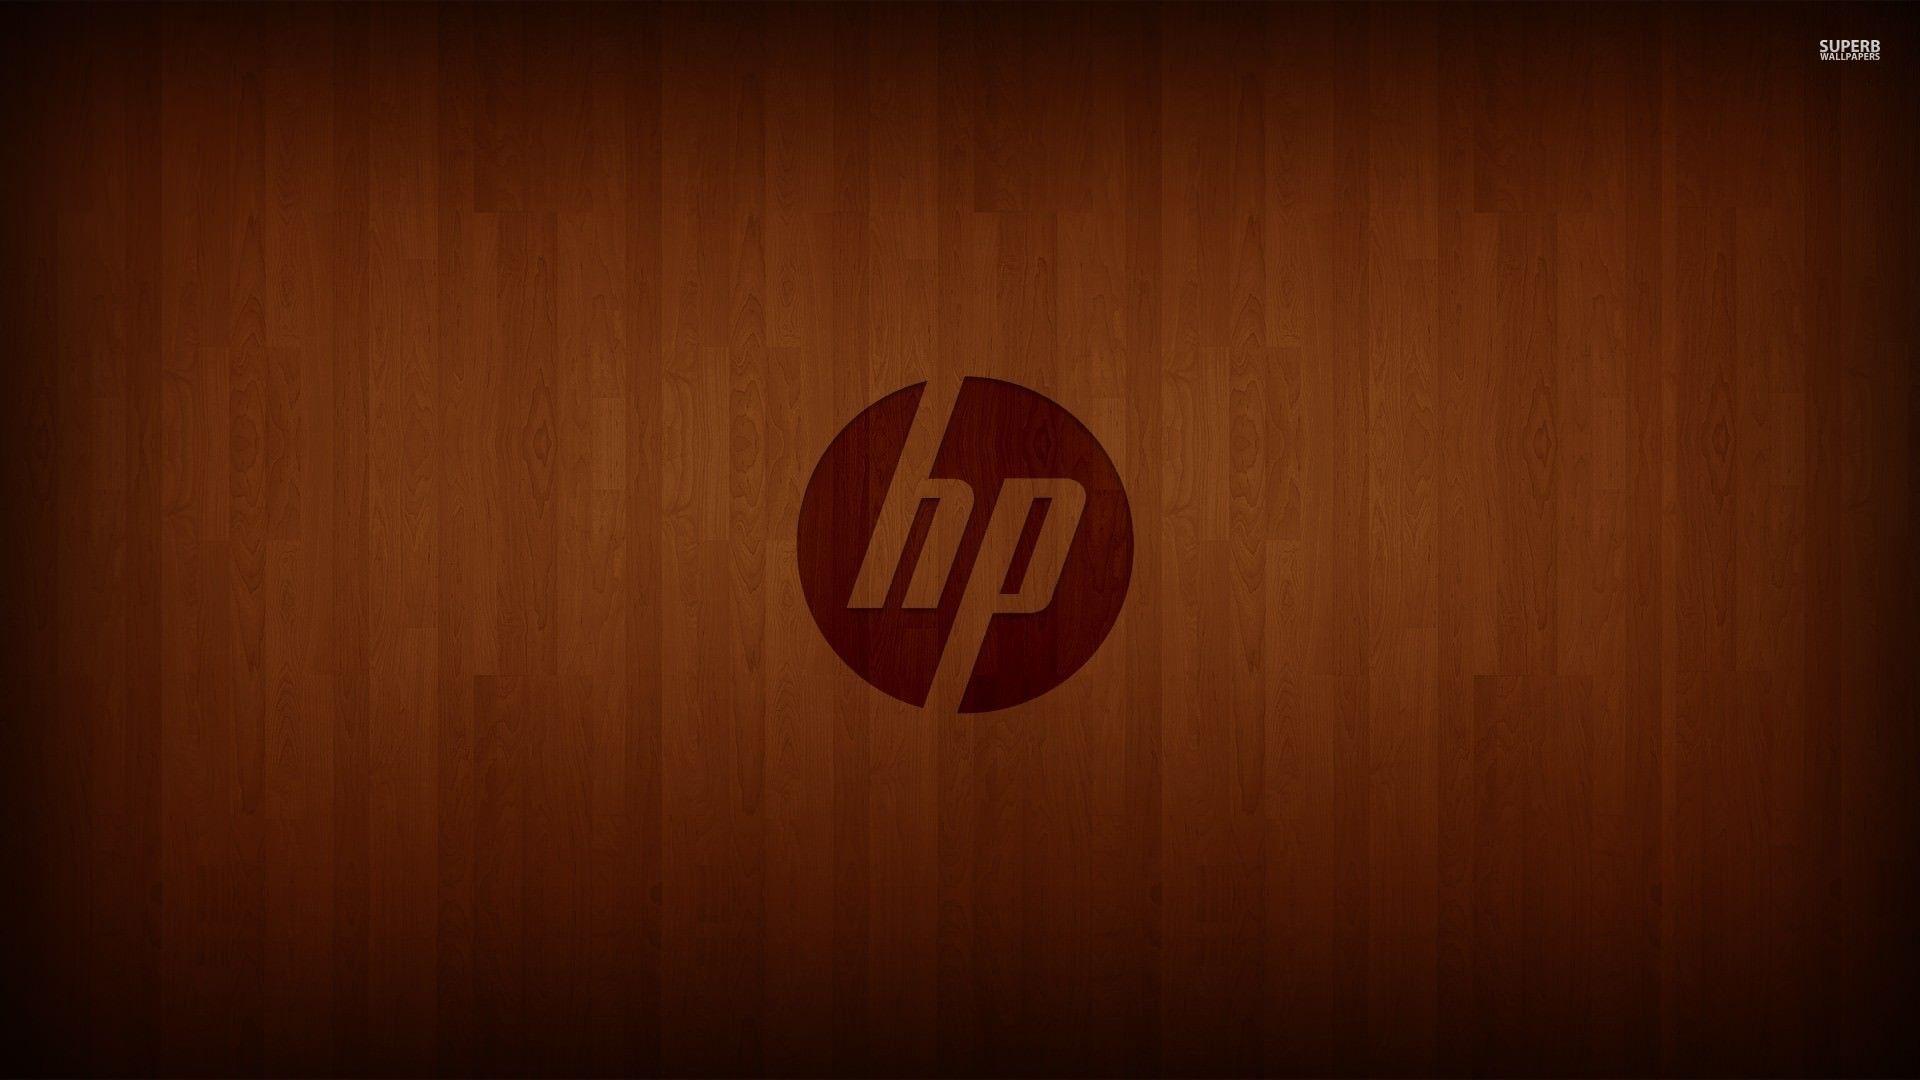 Latest HP Logo - Hp Logo Wallpapers HD - Wallpaper Cave